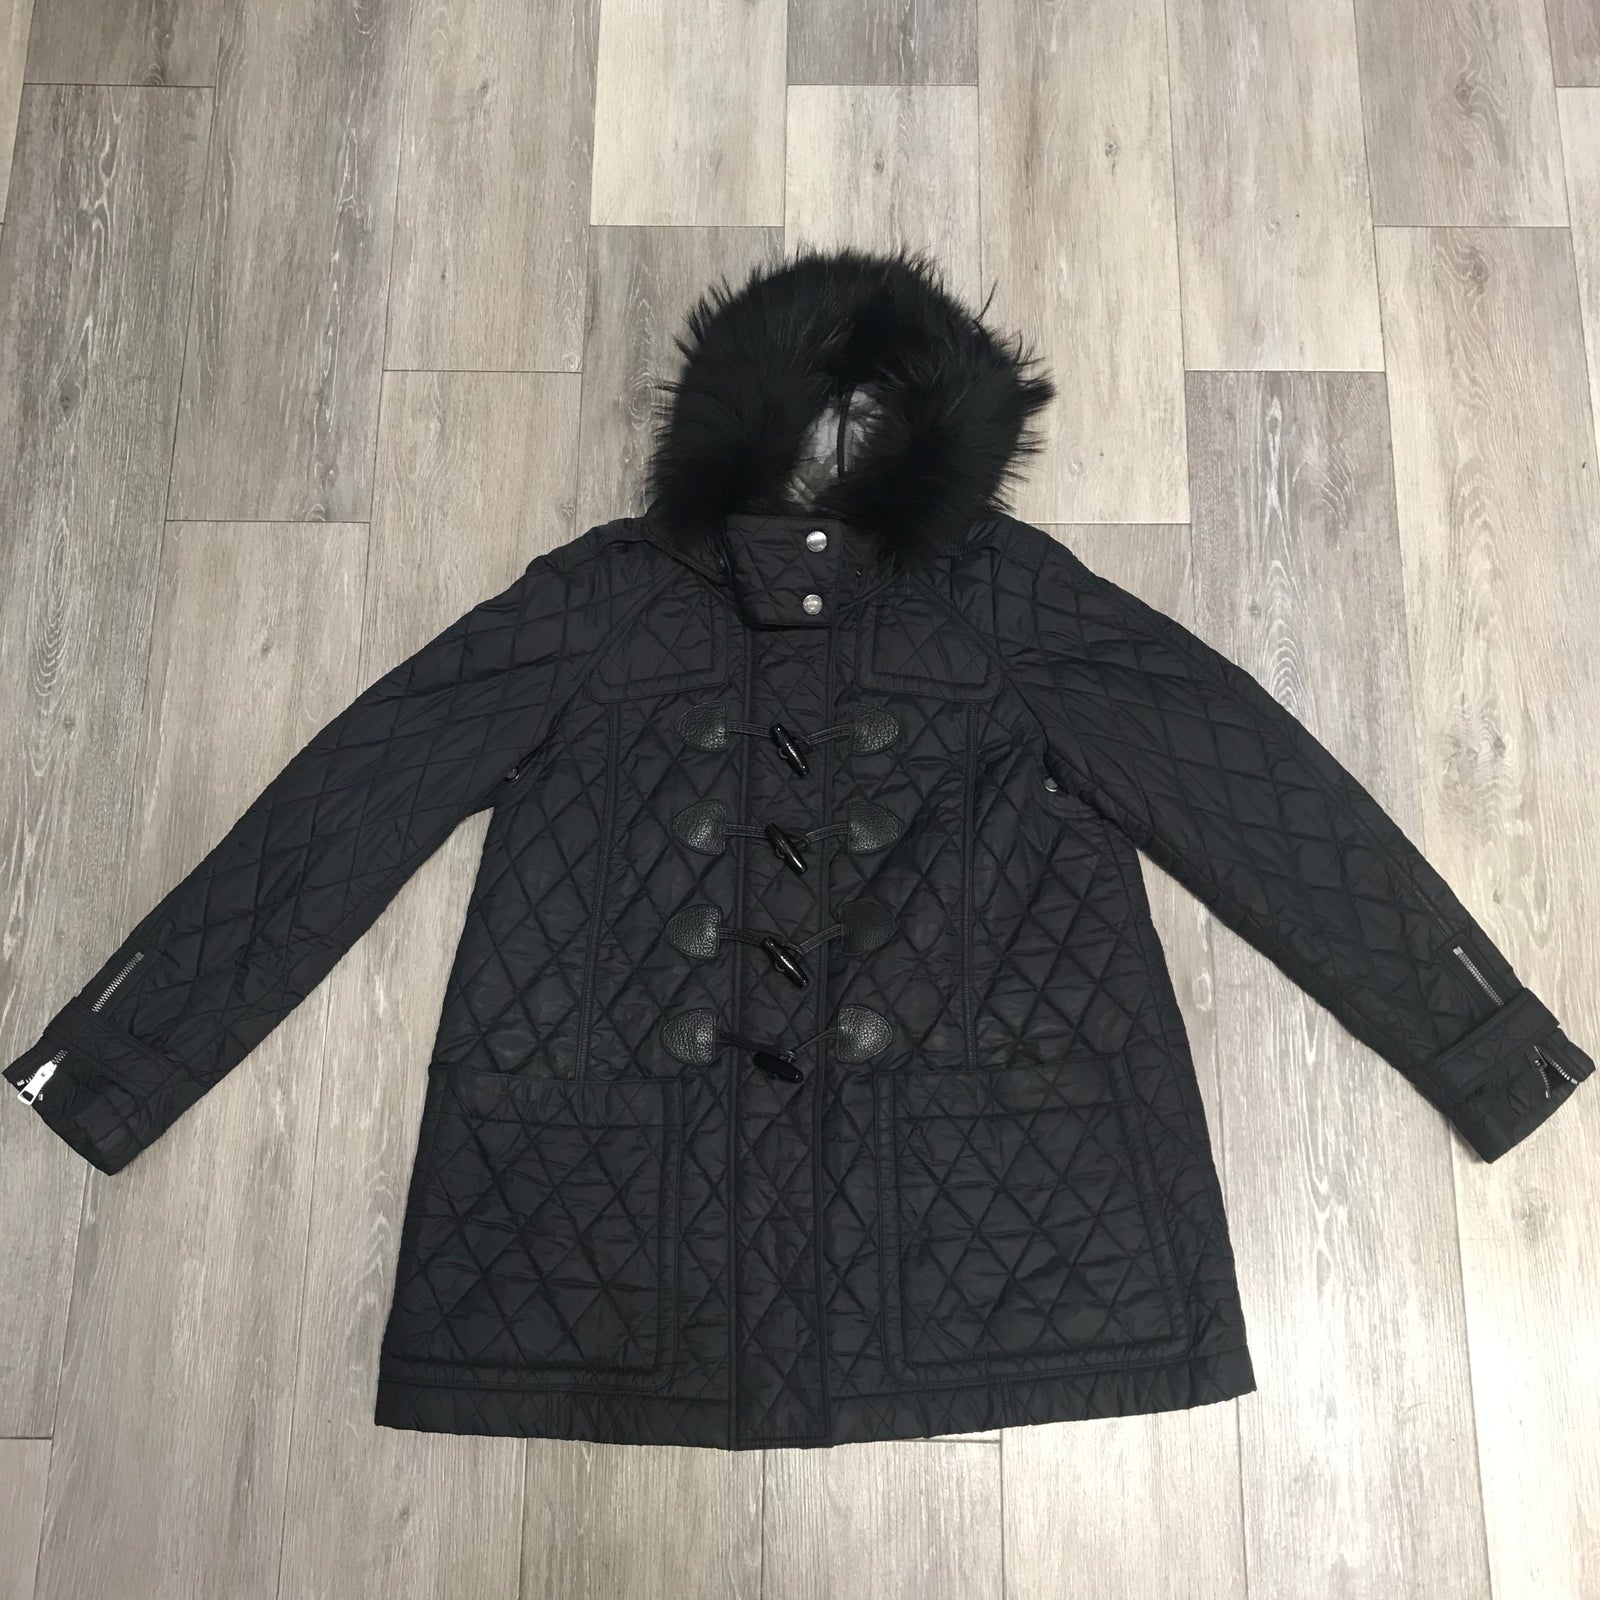 Black Quilted Coat w Fur Hood